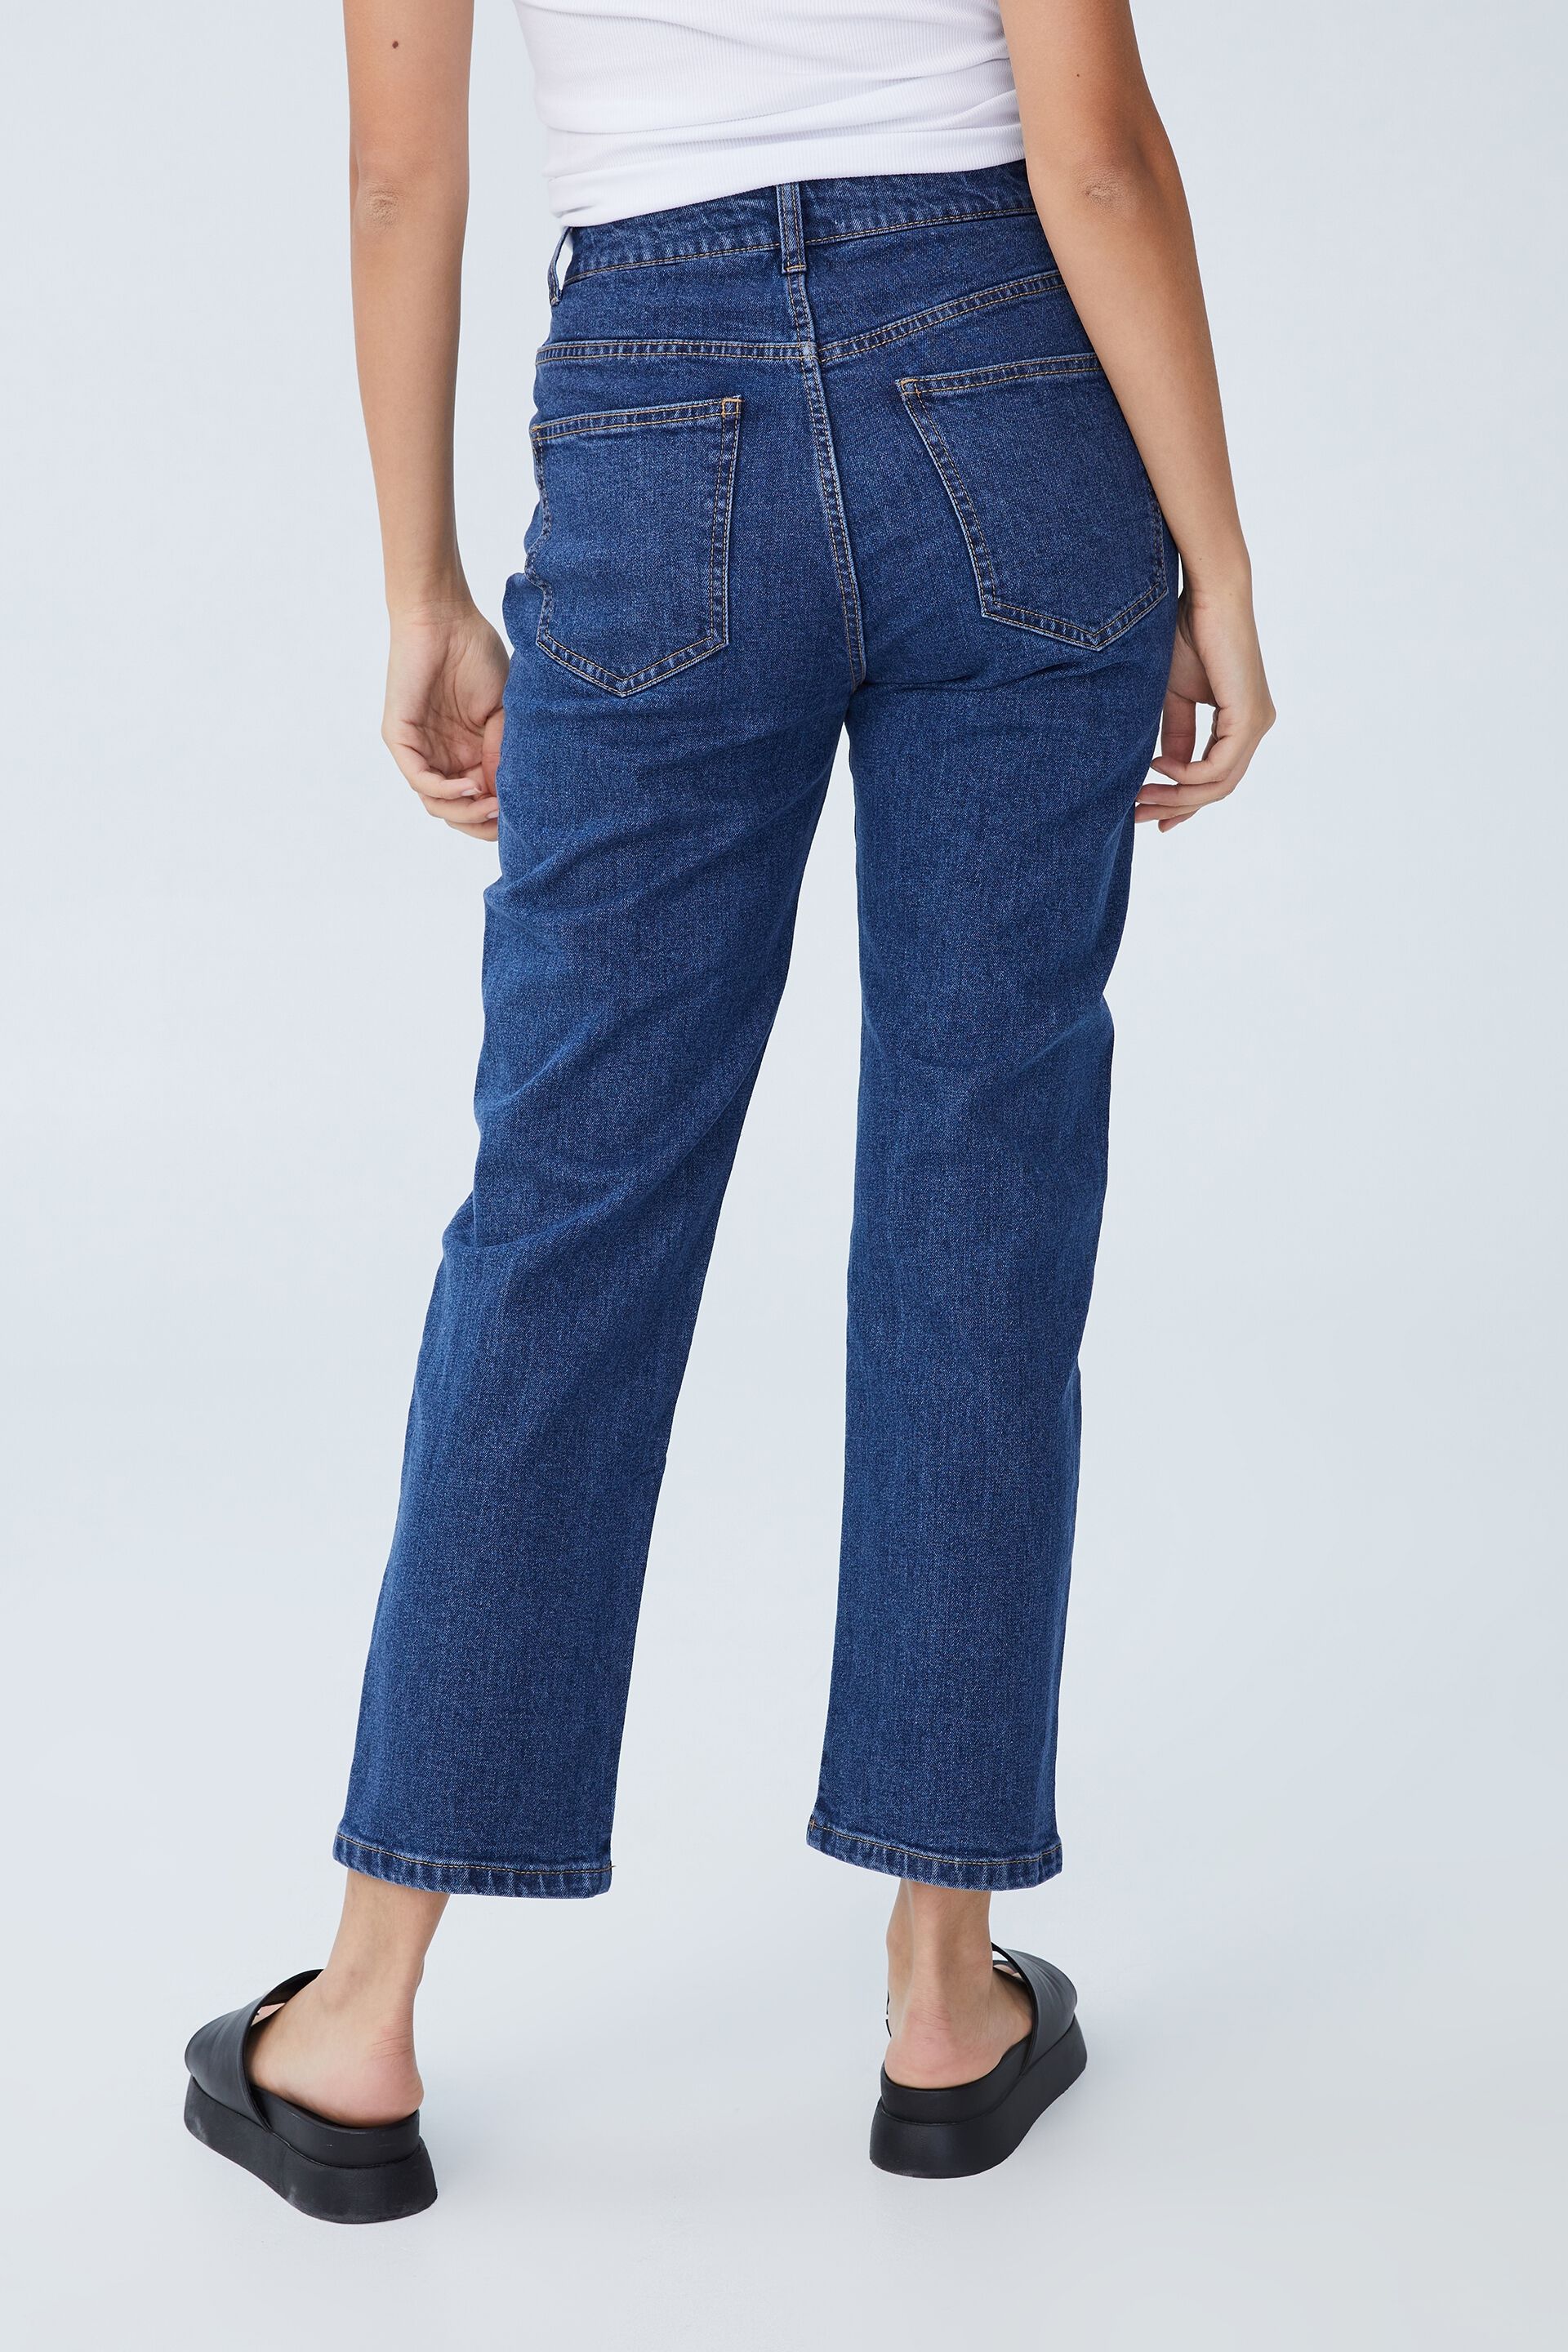 discount 71% Blue 38                  EU NoName capri jeans WOMEN FASHION Jeans Capri jeans Worn-in 